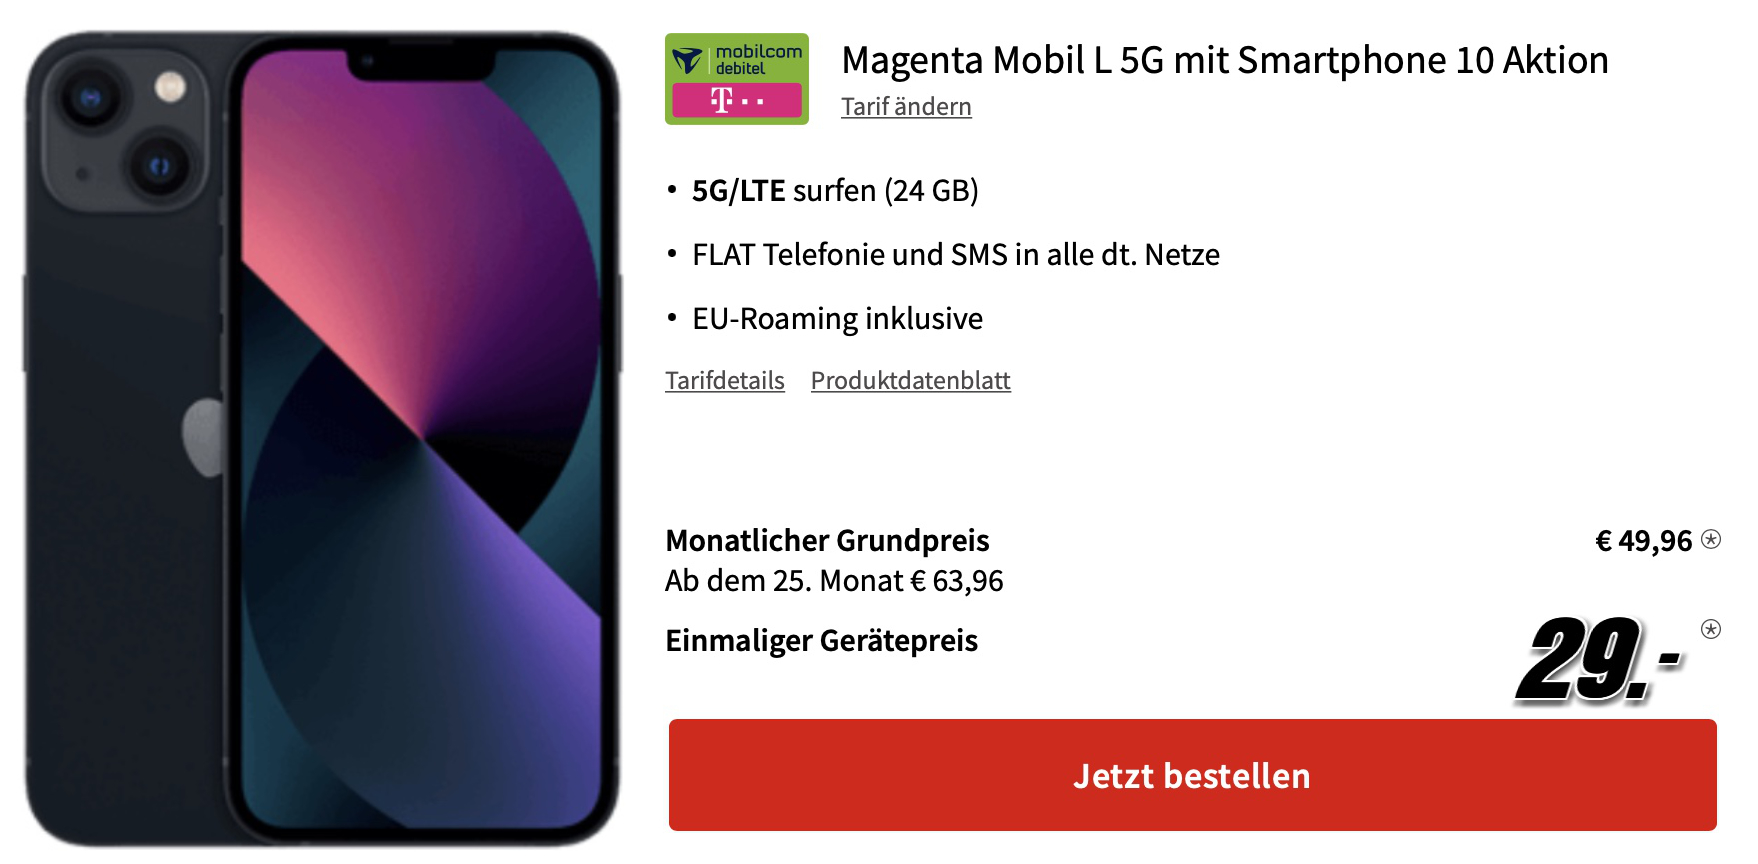 premium-handytarif-telekom-magenta-mobil-l-inkl-flagship-smartphone